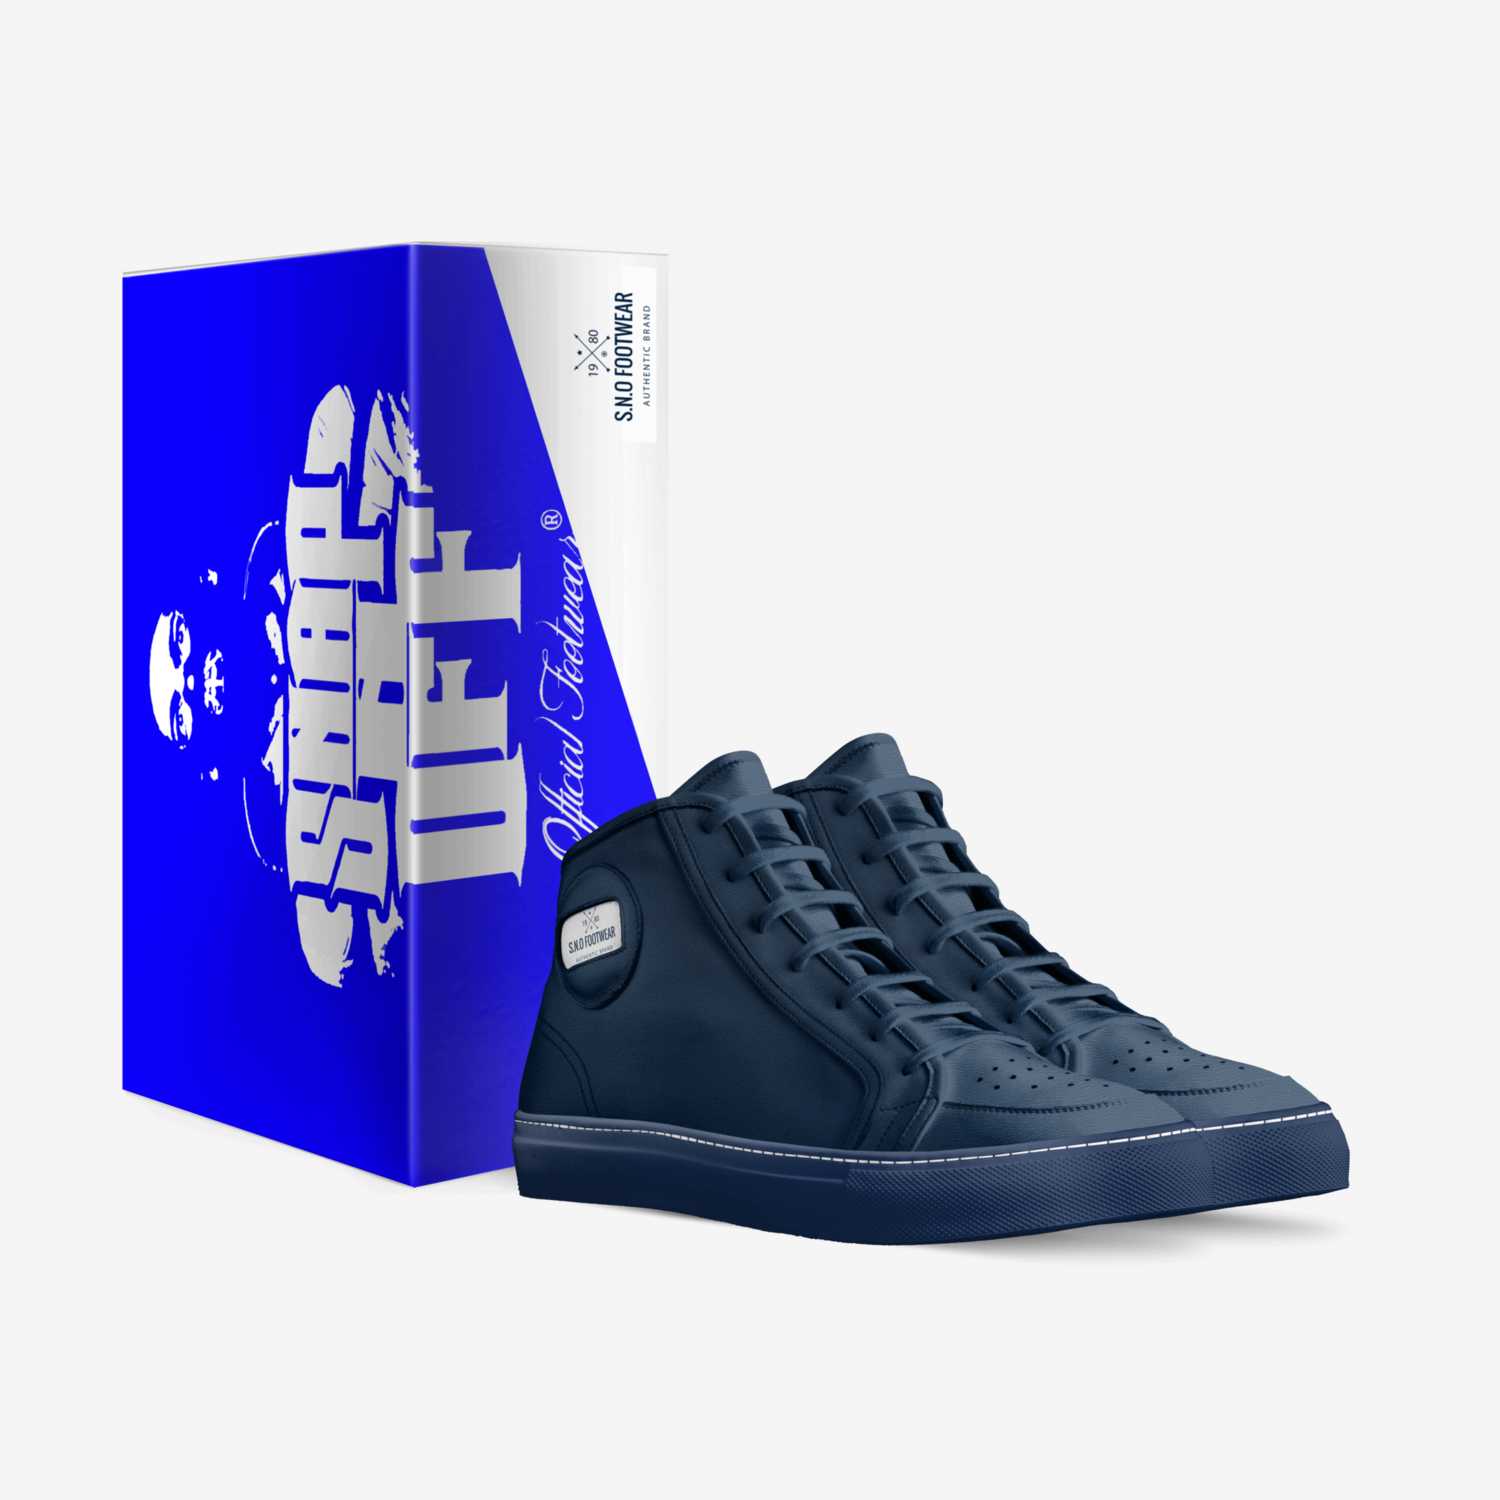 S.N.O FOOTWEAR  custom made in Italy shoes by Zeanetta Bradley | Box view